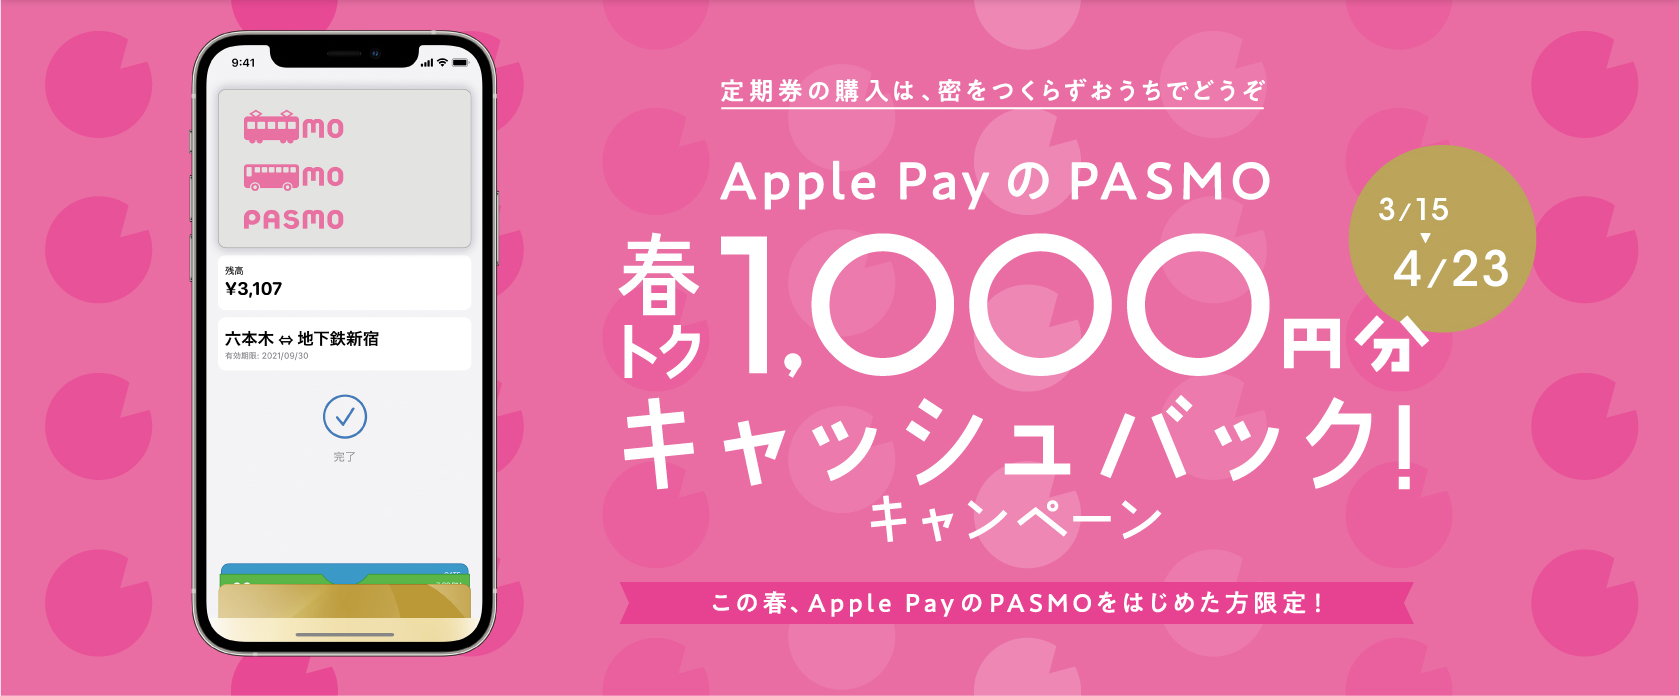 ApplePayでPASMOを始めて5000円以上使うと、1000円分キャッシュバック～4/23。